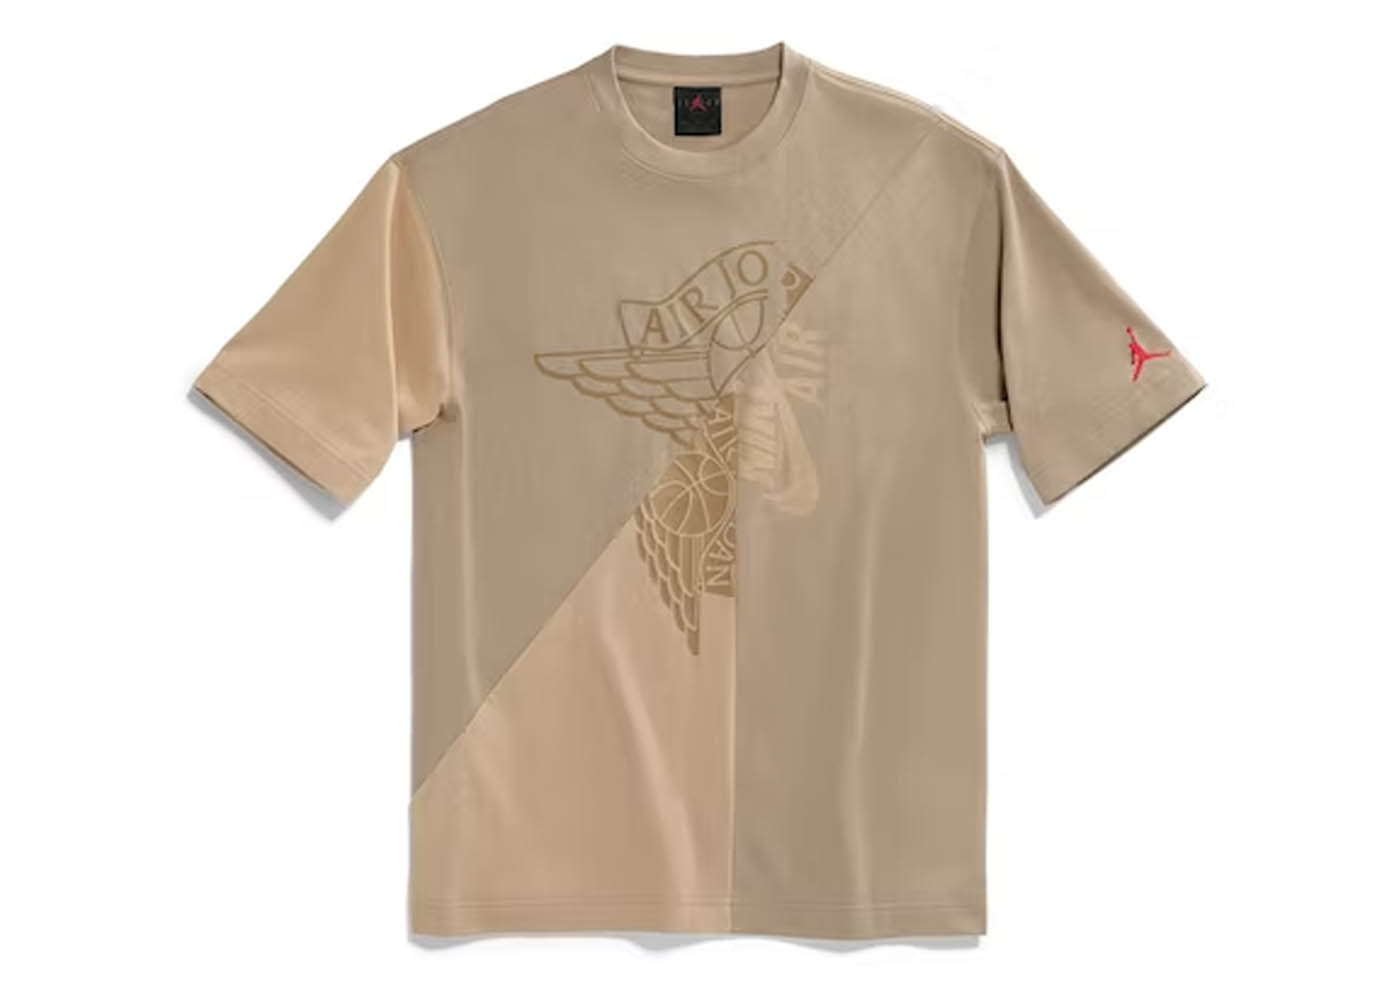 Travis Scott Cactus Jack x Jordan T-shirt (Asia Sizing) Khaki/Desert